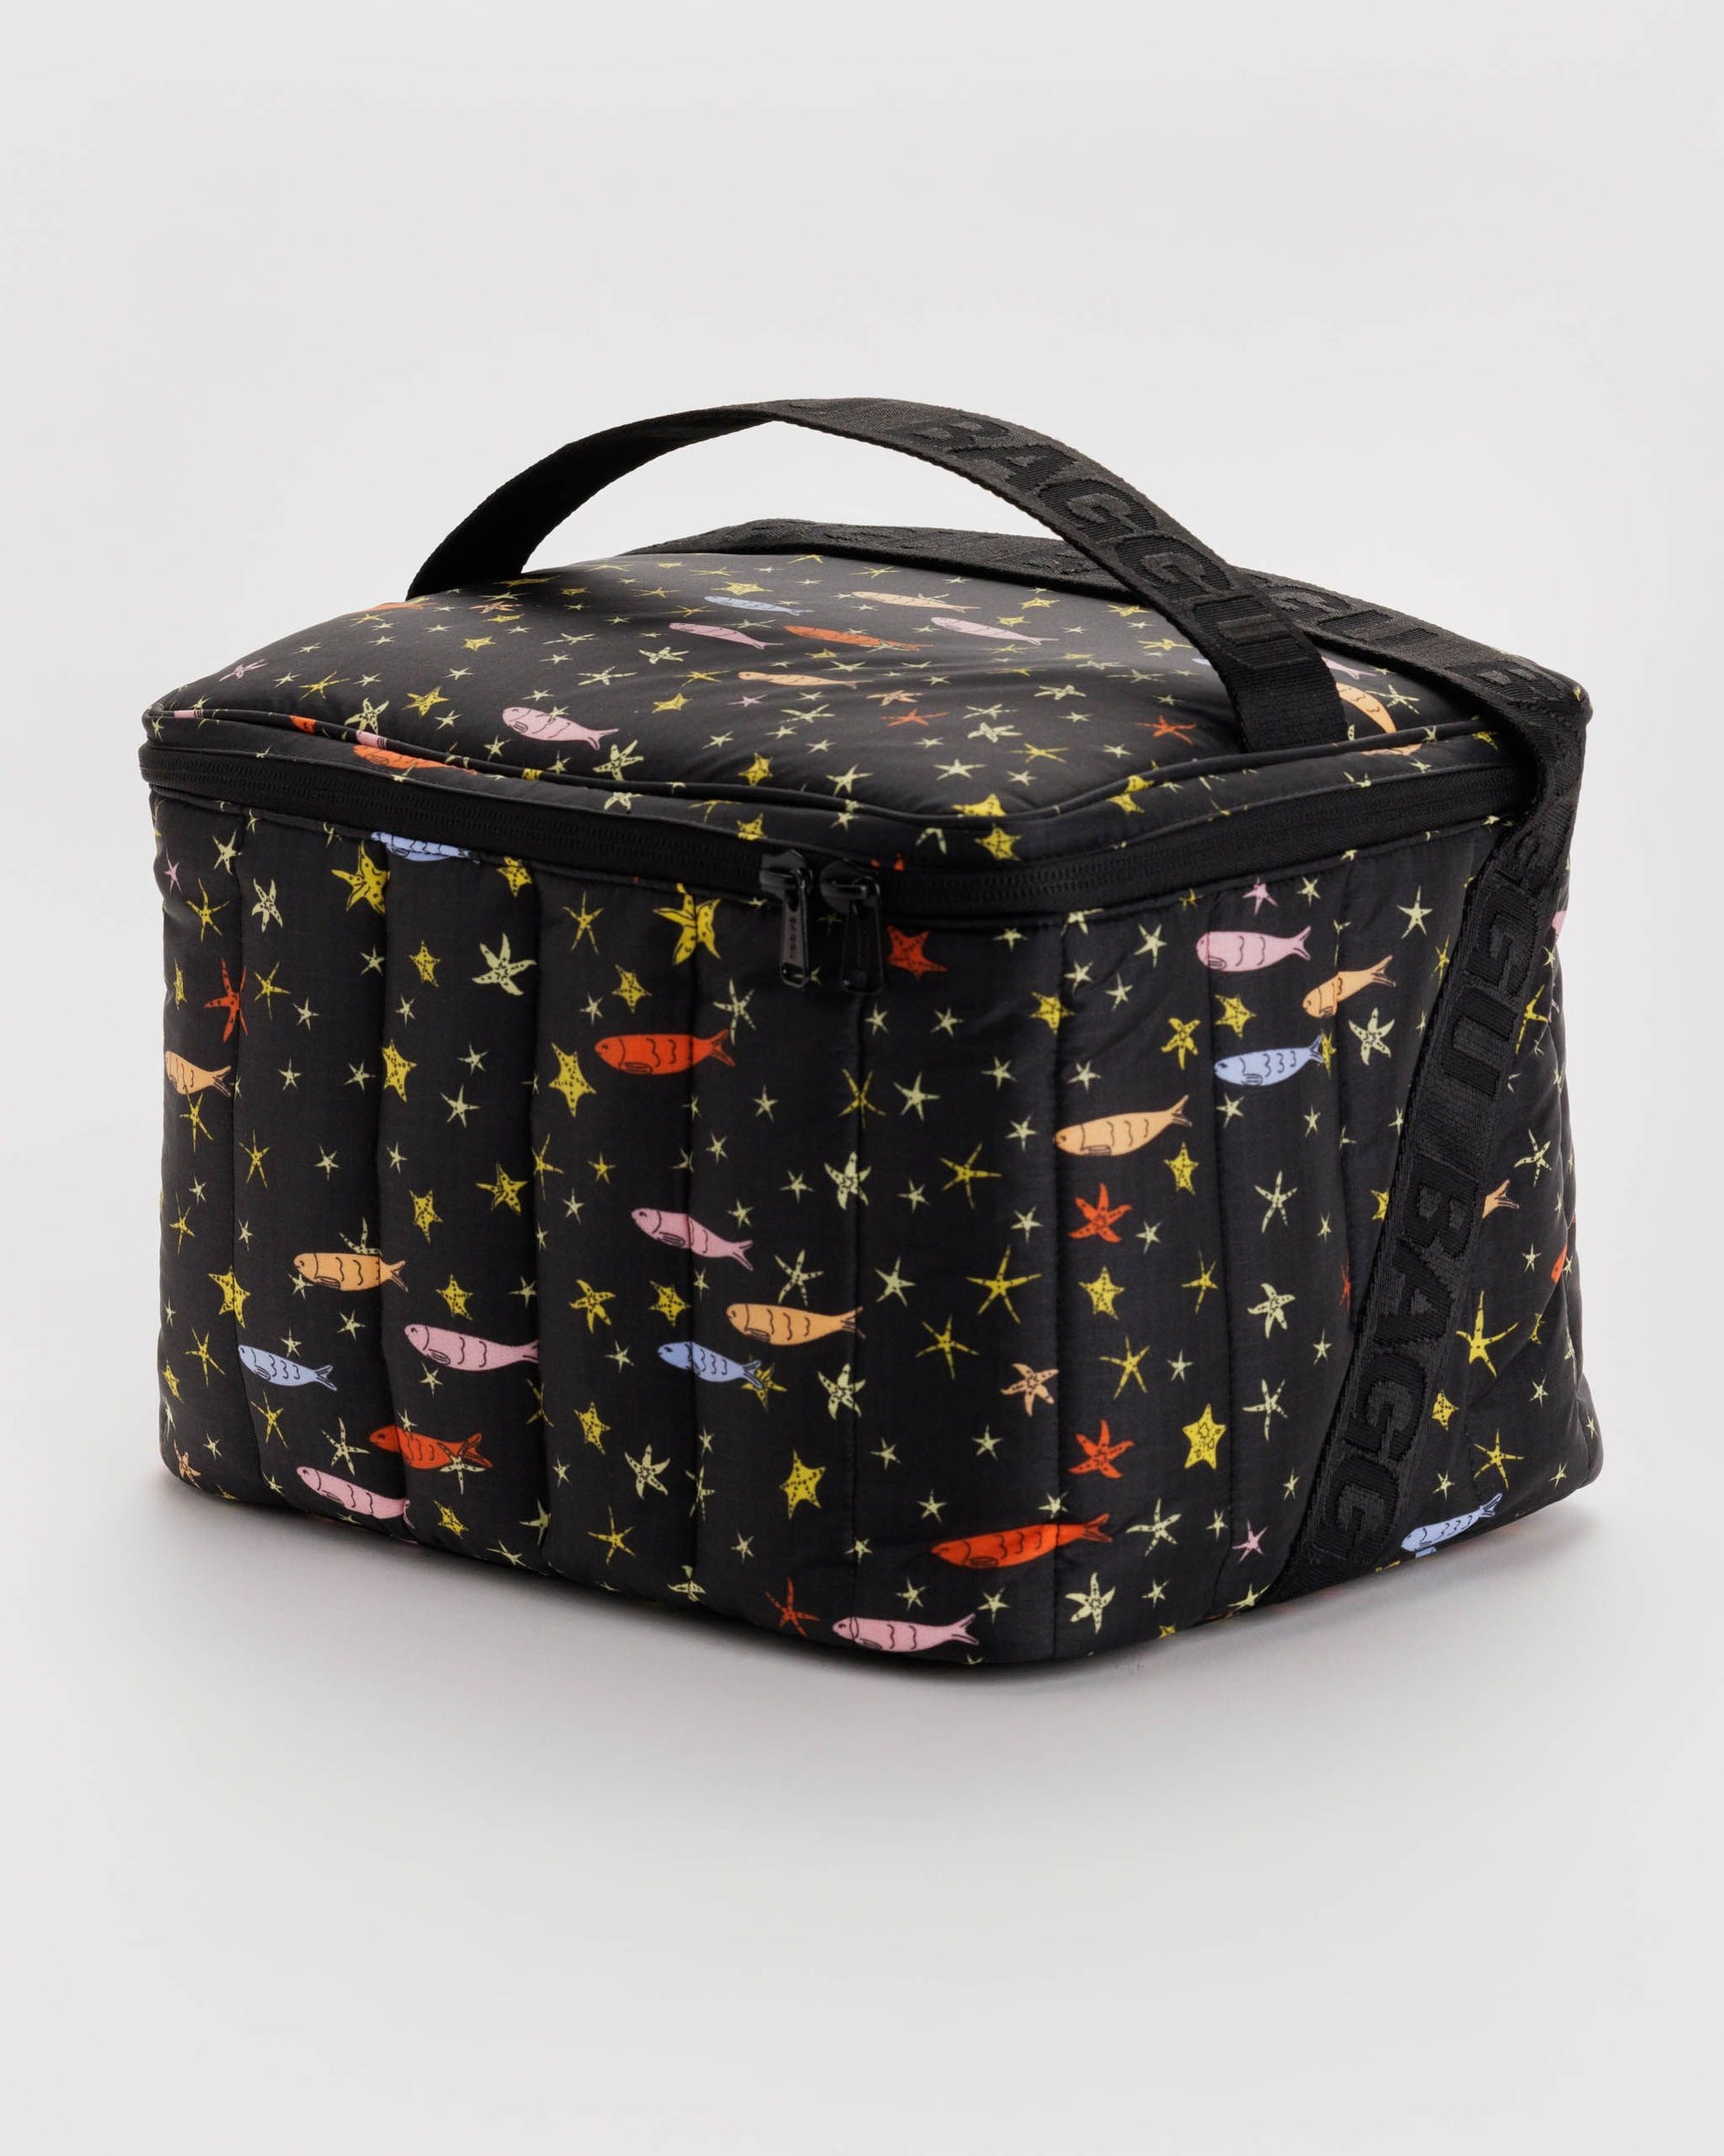 Puffy Cooler Bag, Star Fish